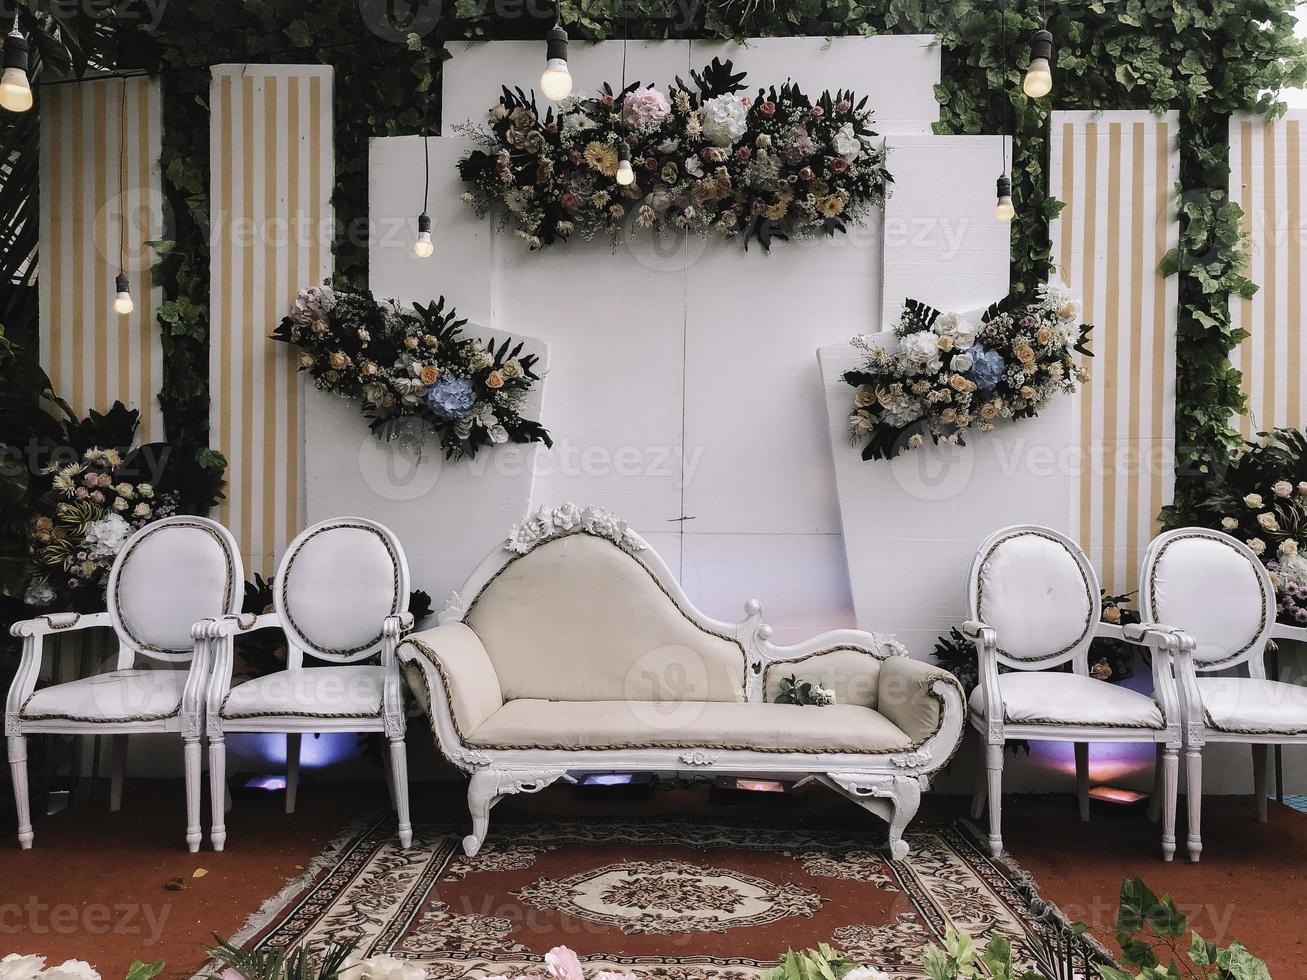 Indonesian simple elegant wedding decor stage photo